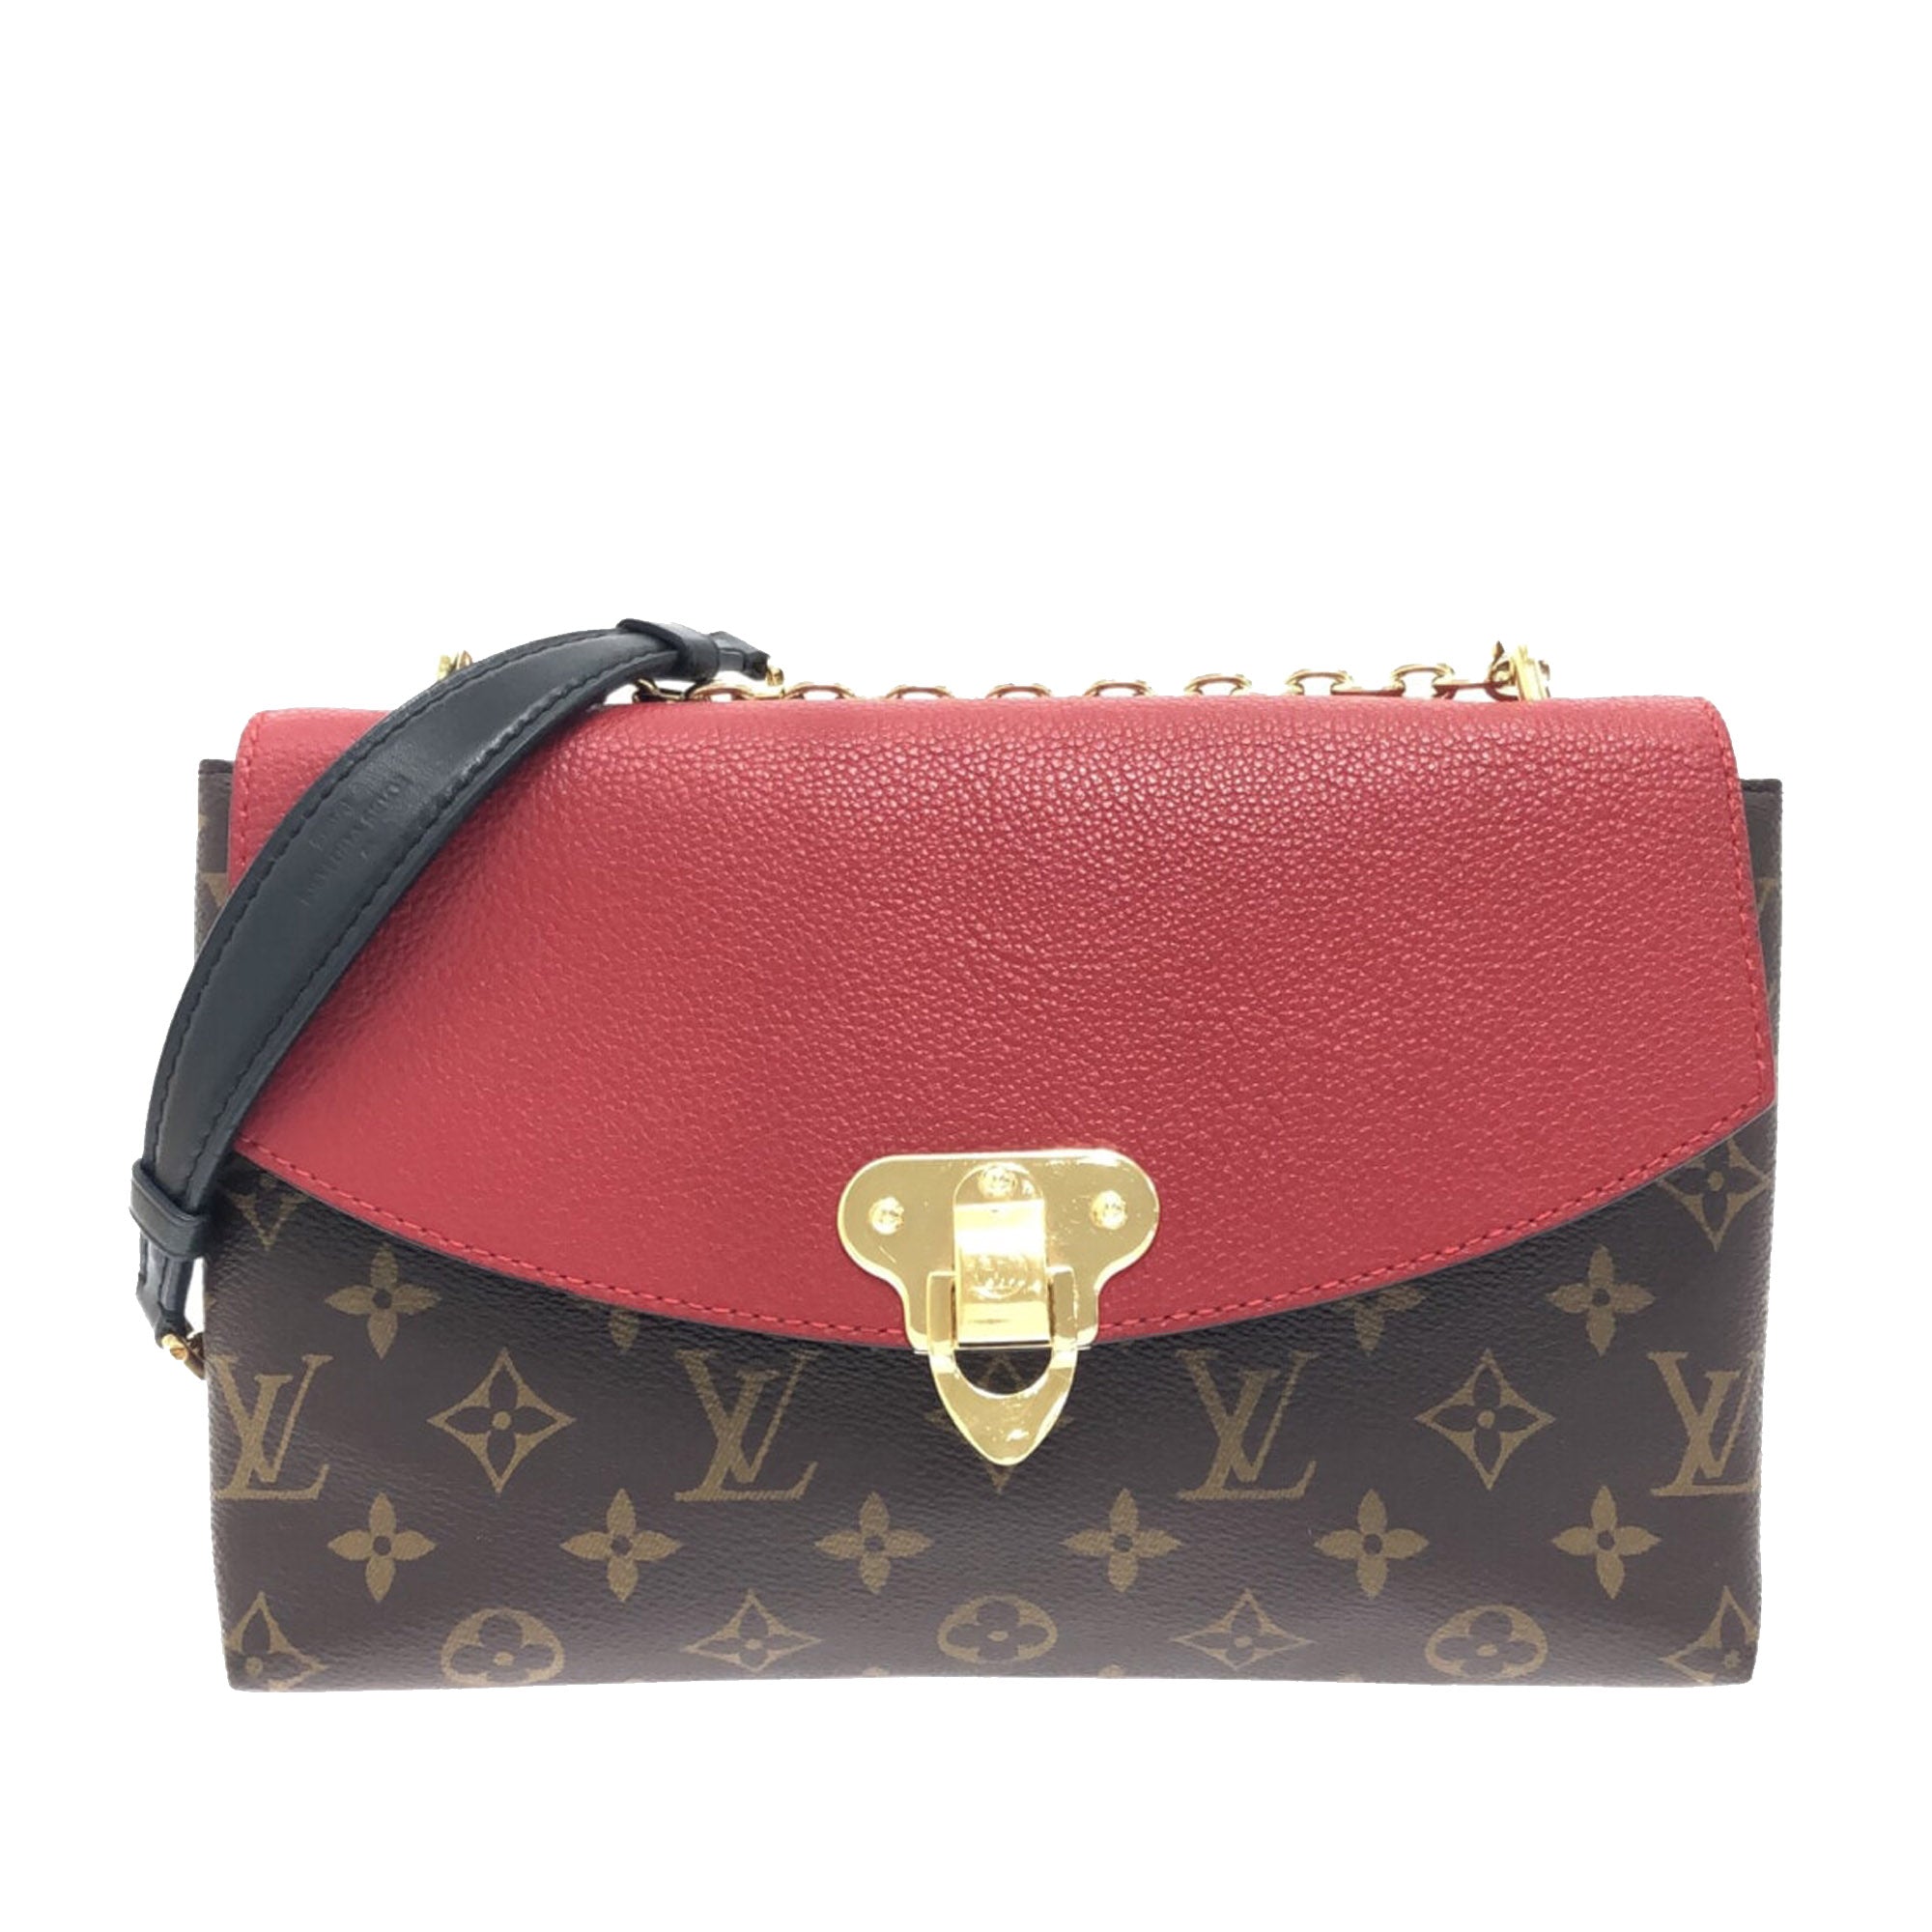 Saint placide leather handbag Louis Vuitton Brown in Leather